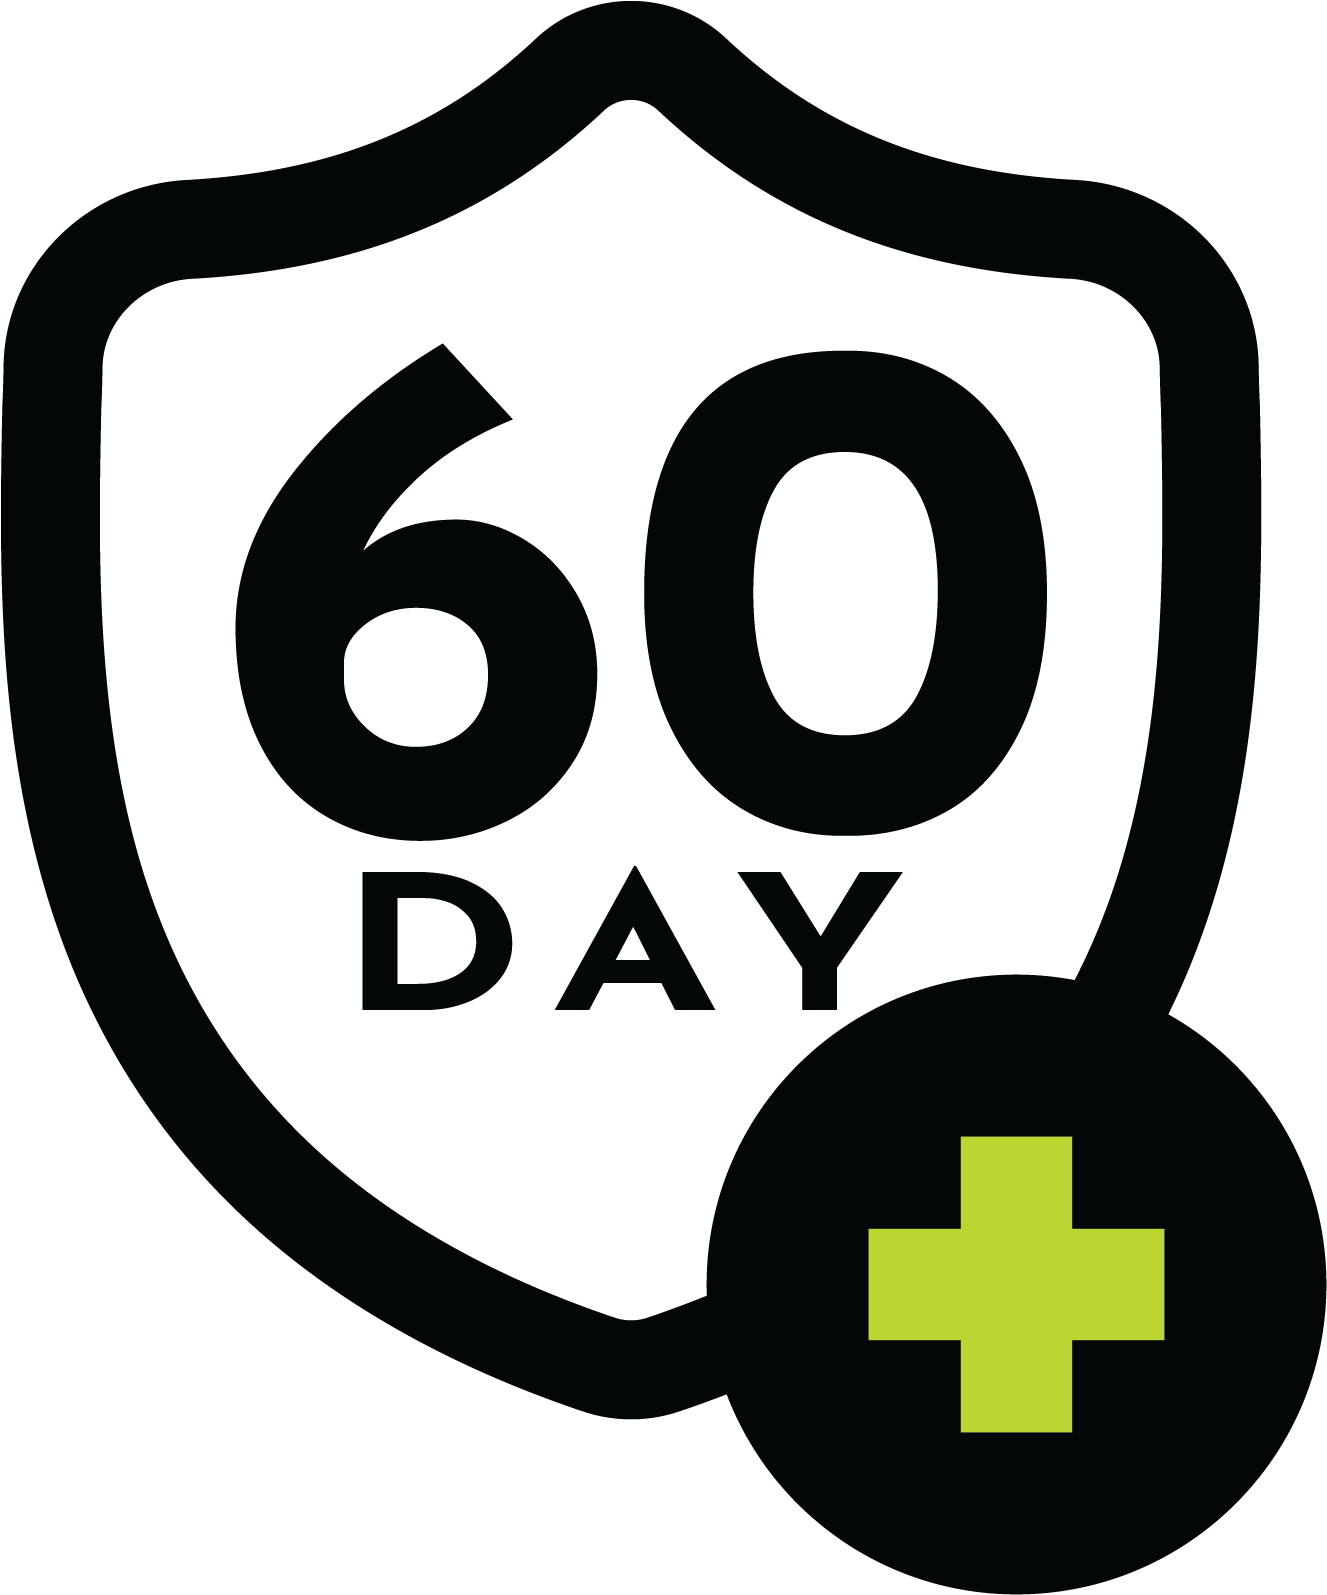 60 Day Comfort Logo